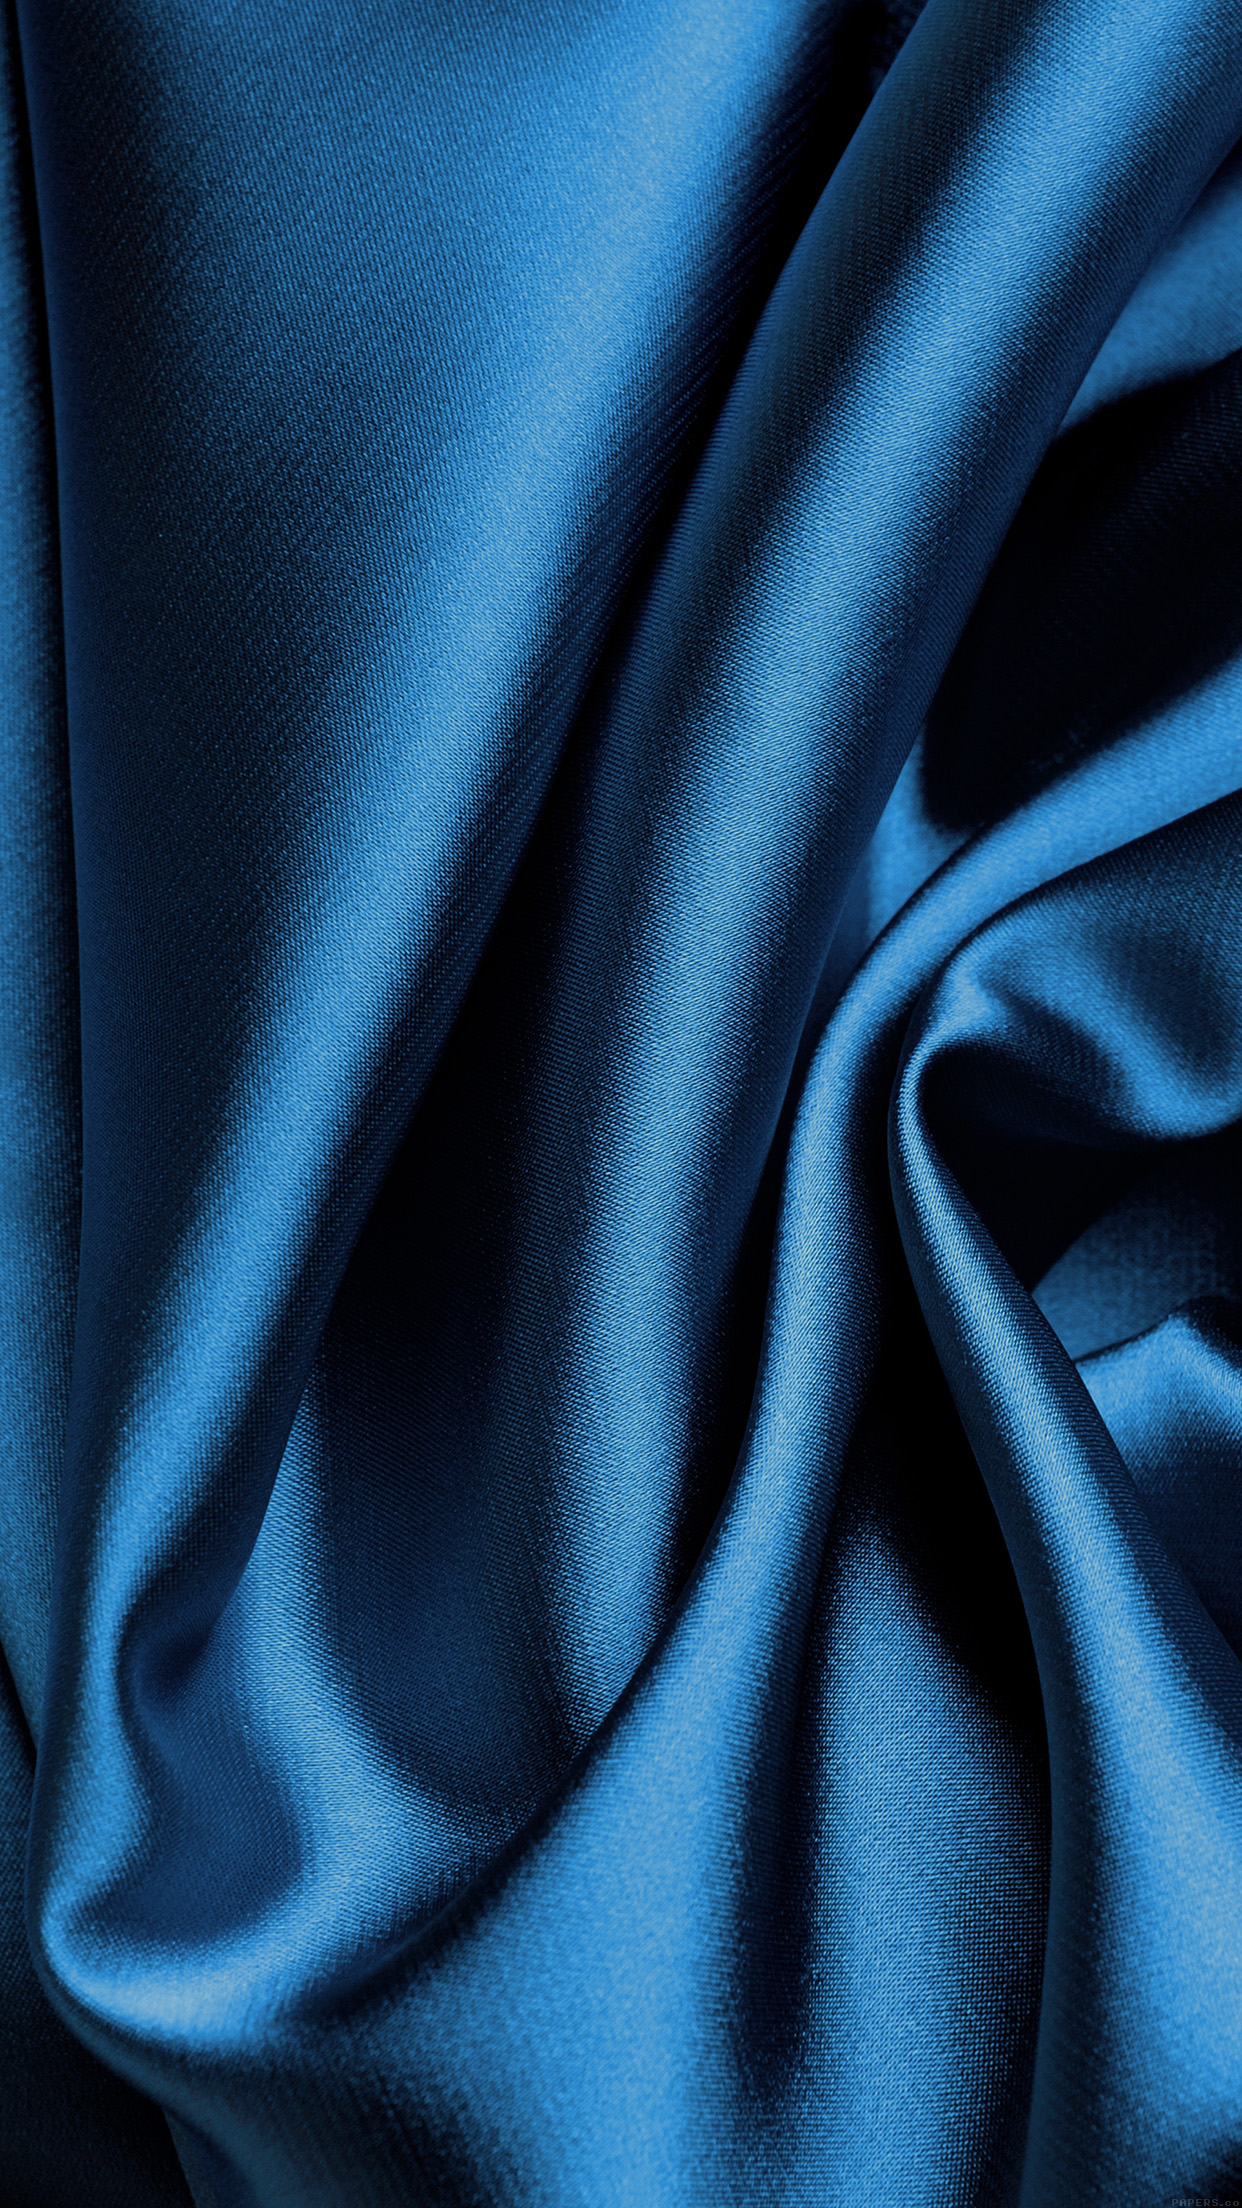 Blue Silk Fabric Texture iPhone 6 Plus HD Wallpaper